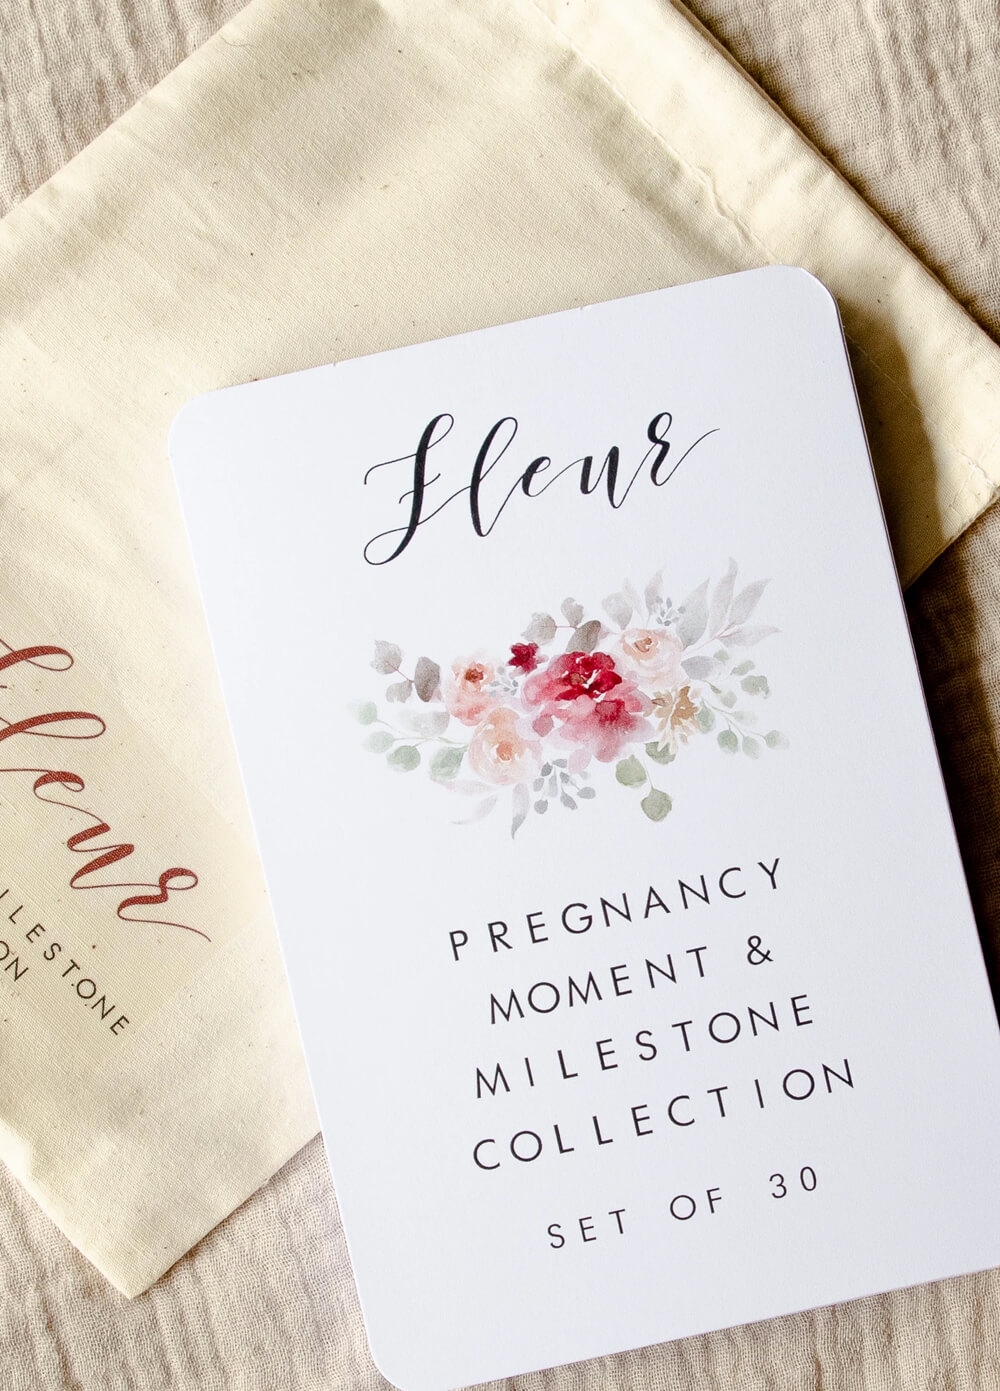 Blossom & Pear - Pregnancy Milestone Cards in Fleur